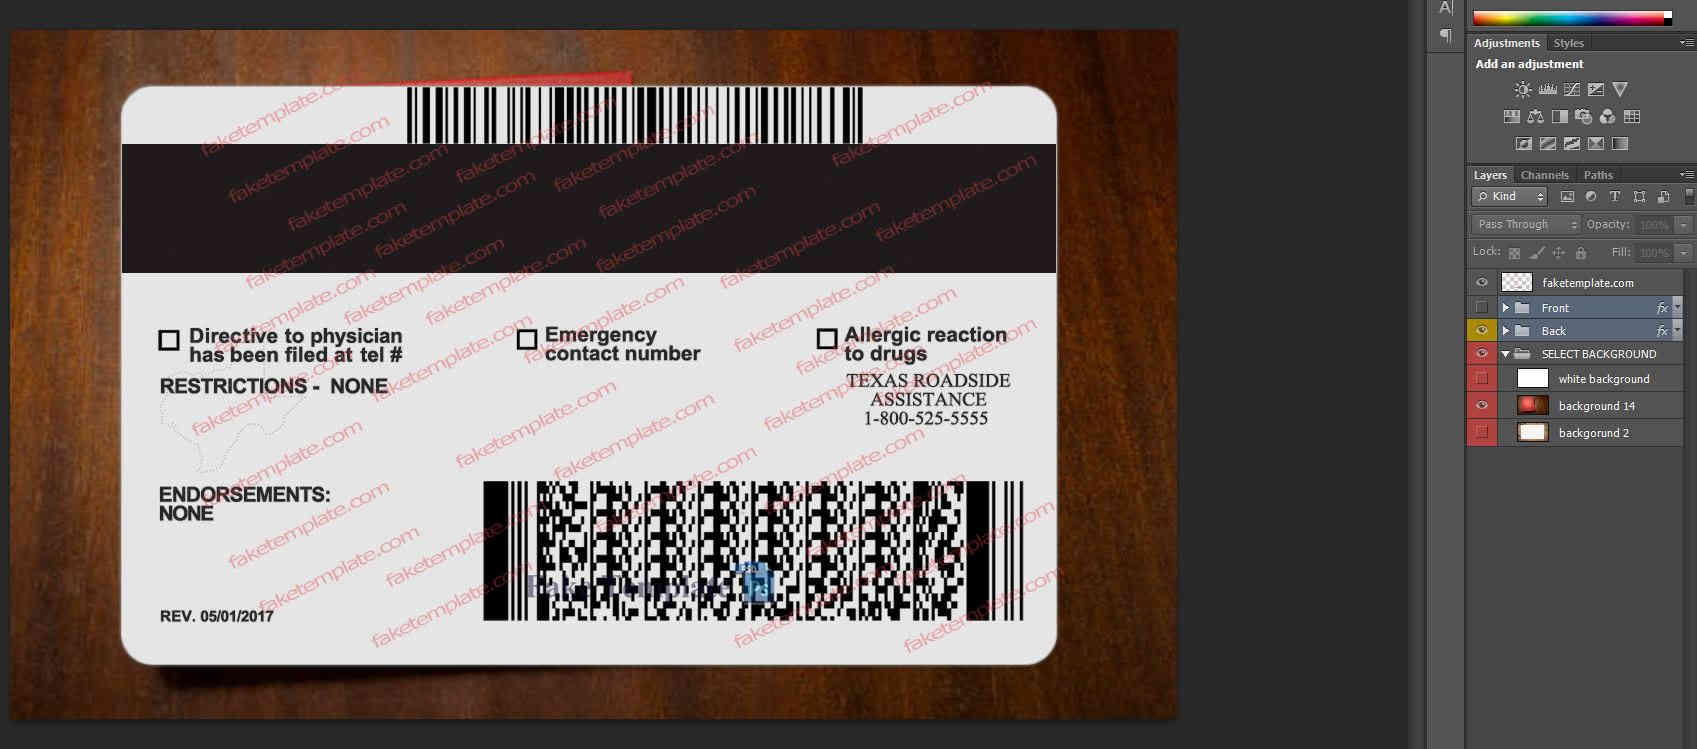 United states passport images 2x2 inches size, unit, criteria